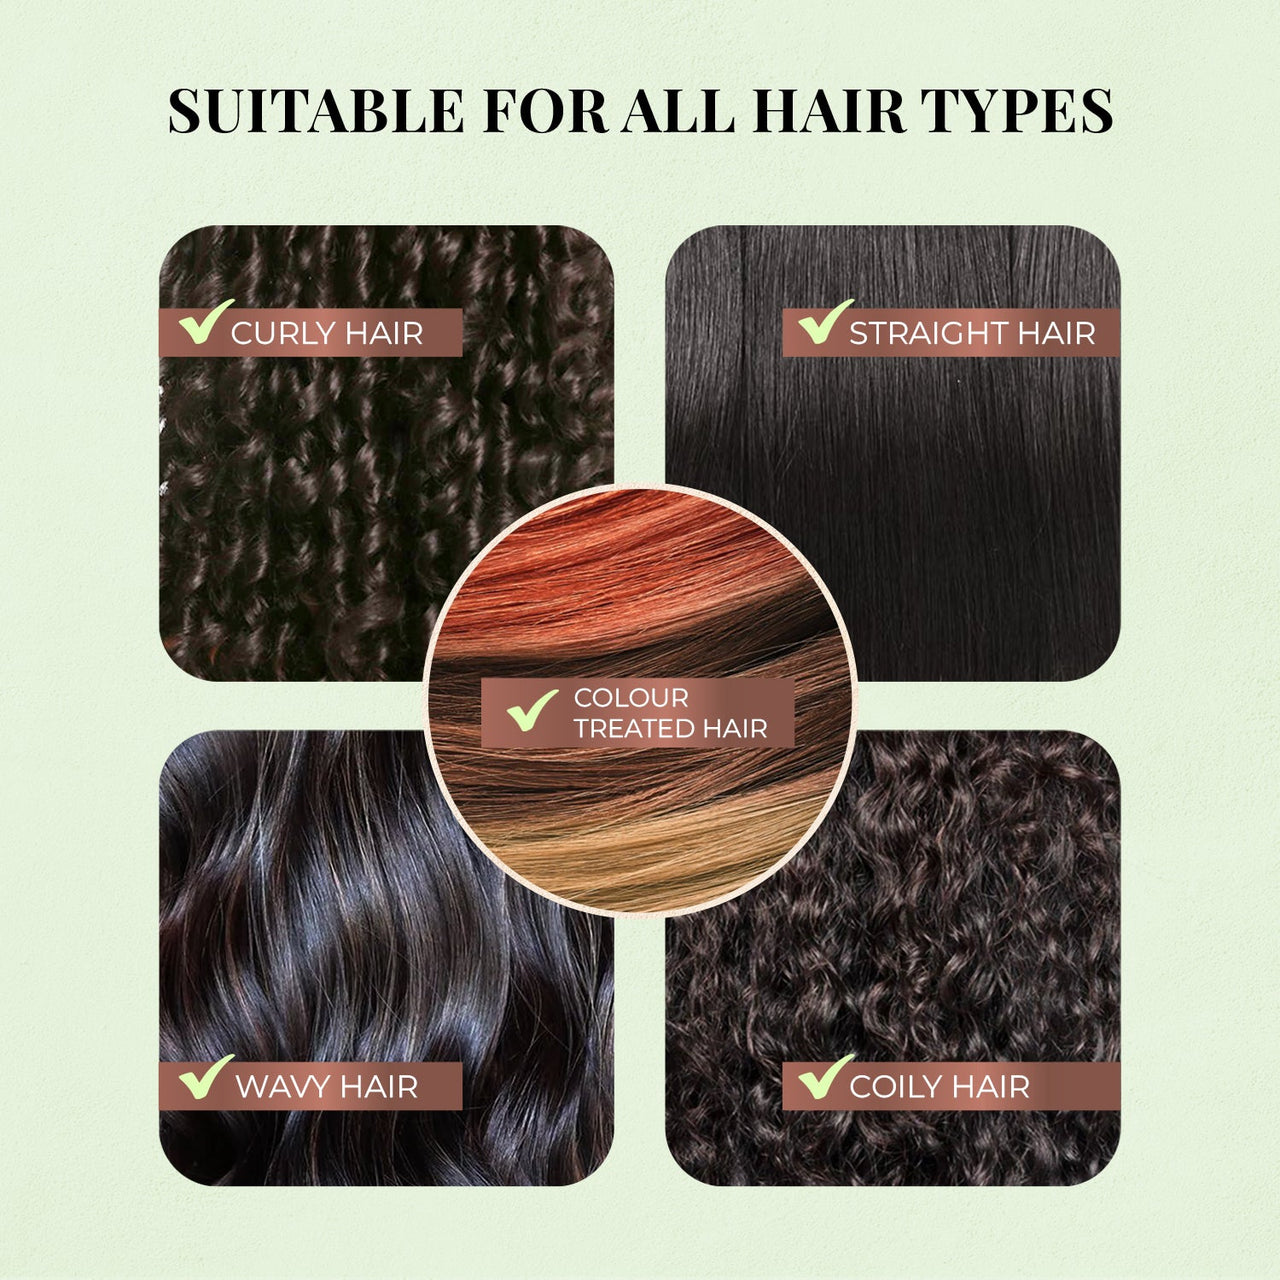 Anti-Hairfall Shampoo with Amla & Neem - Just Herbs